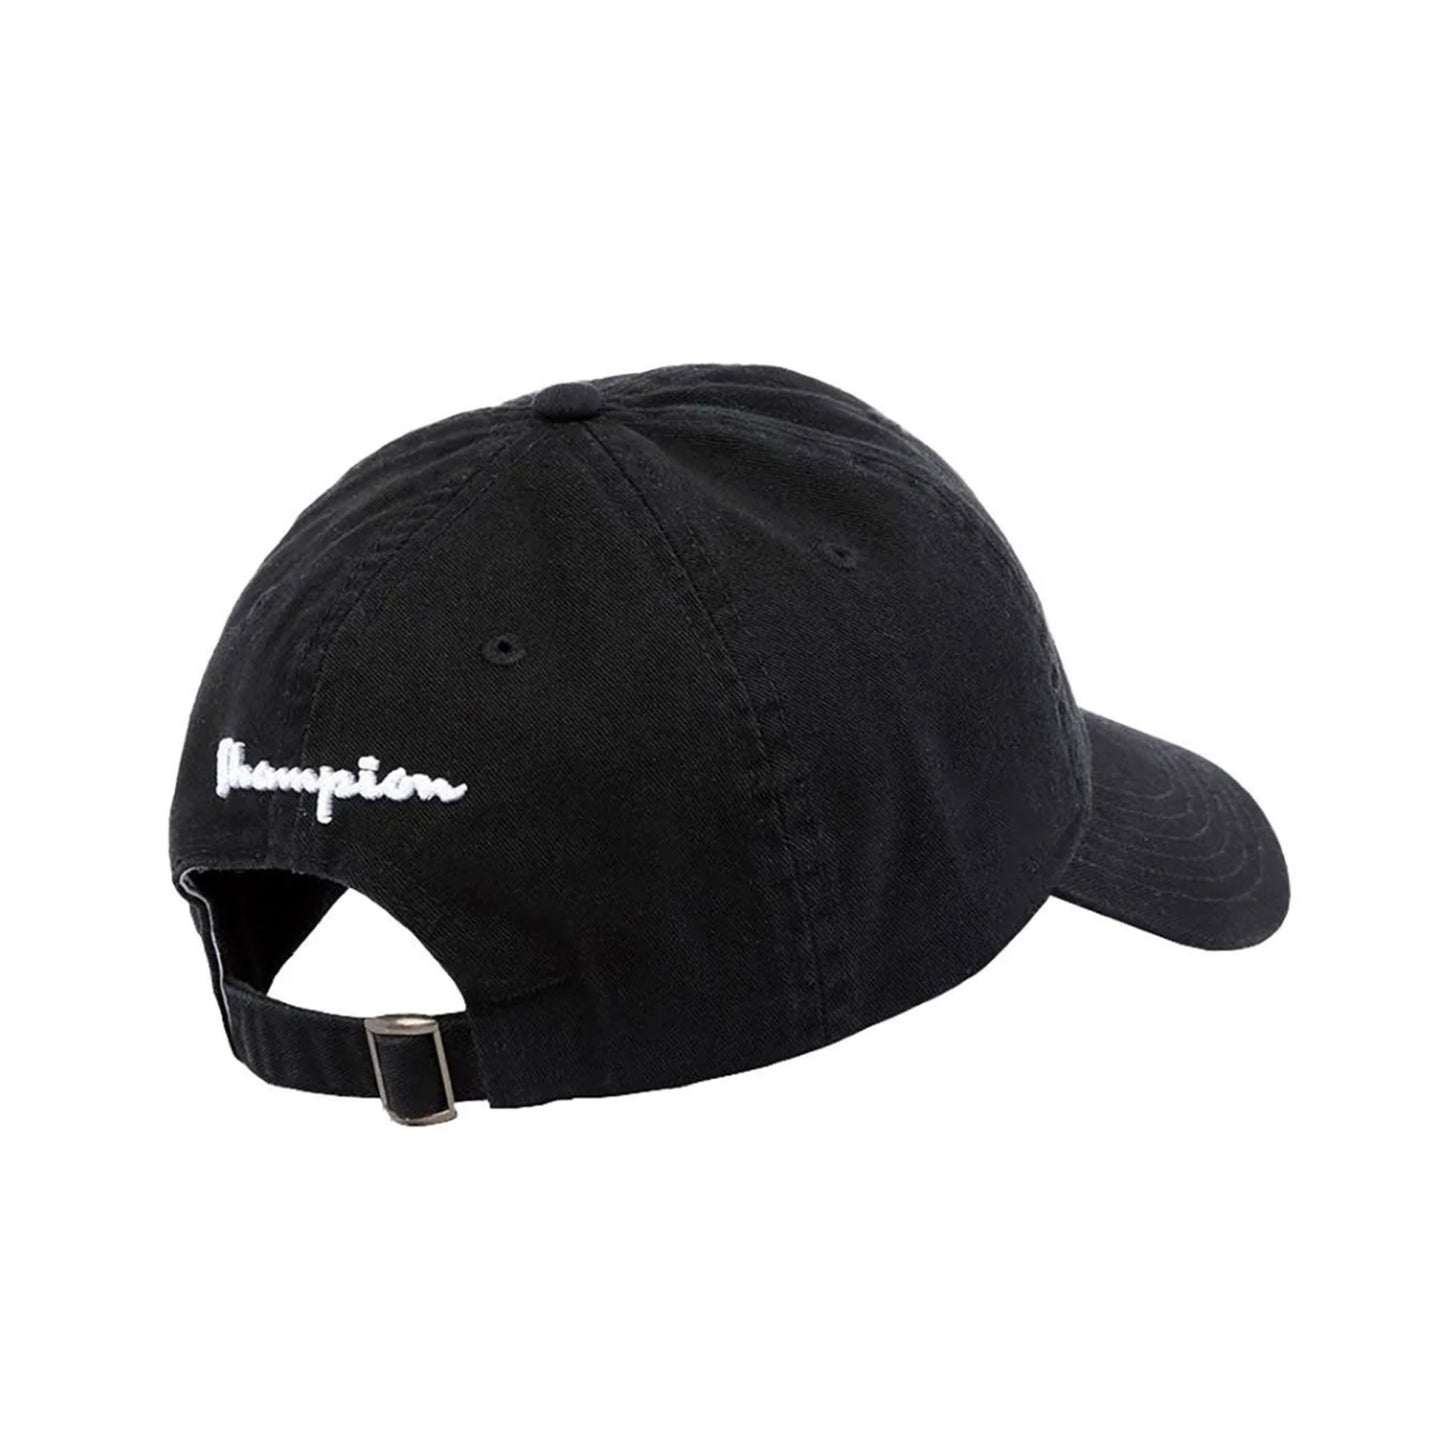 Champion / OFD black Cap